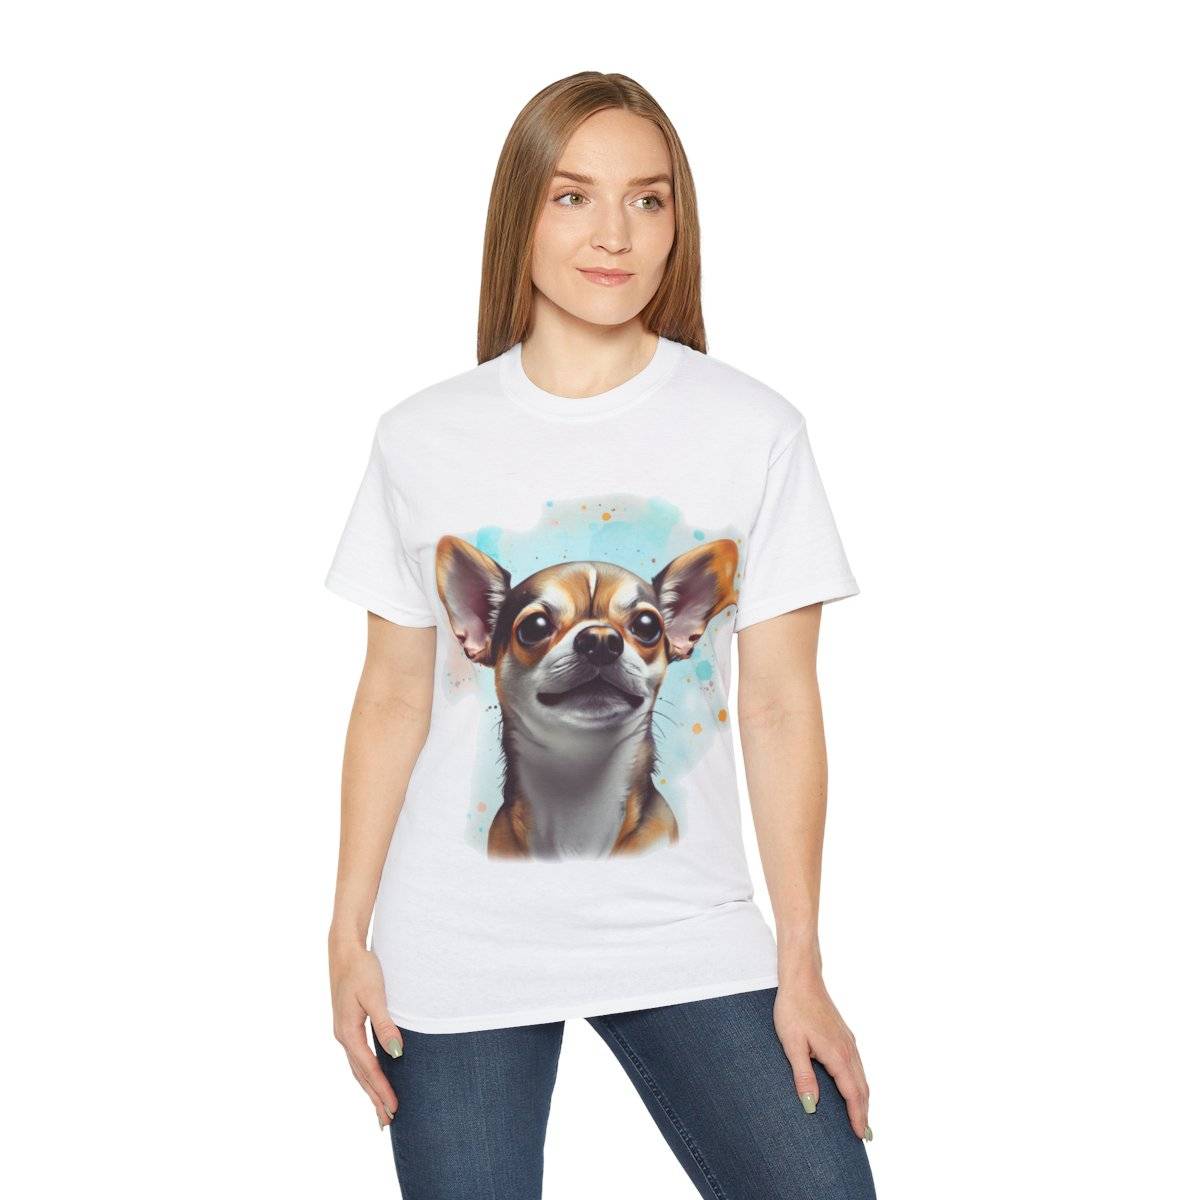 Unisex Chihuahua Tee Shirt